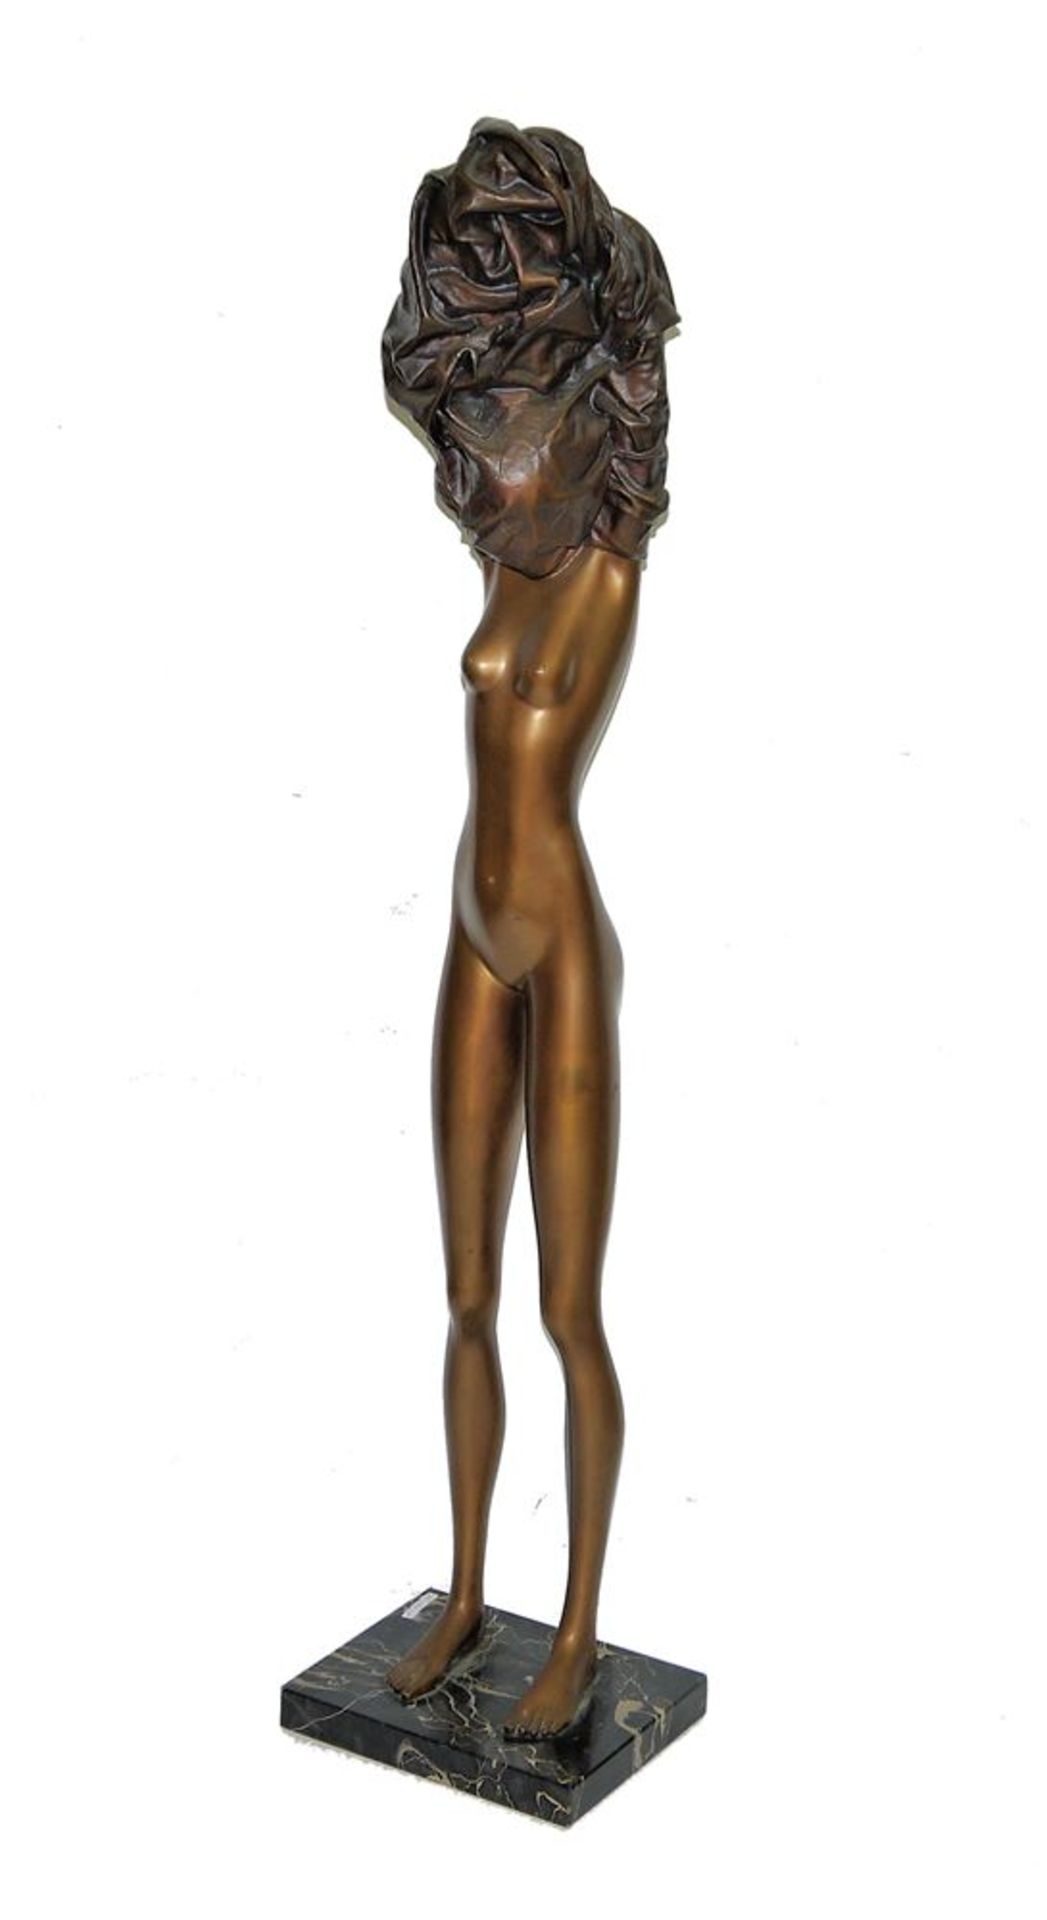 Bruno Bruni, "La divina", large bronze sculpture (107 cm) from 1981